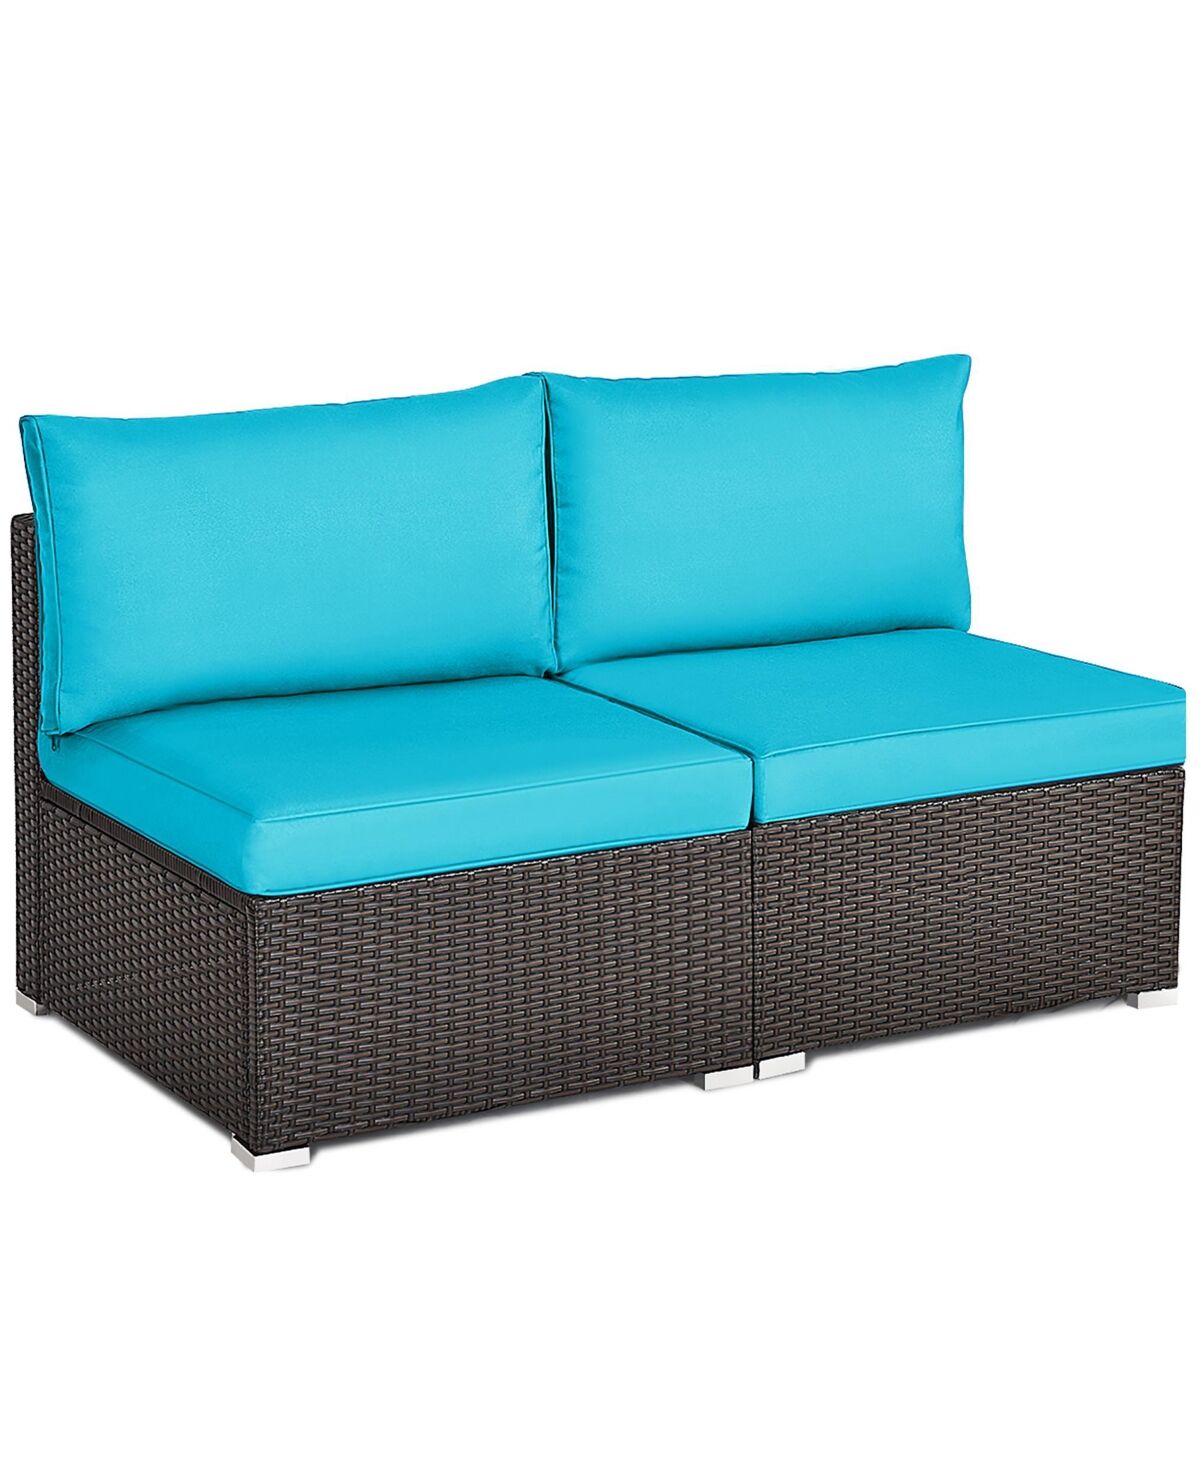 Costway 2PCS Patio Rattan Armless Sofa Sectional Conversation Furniture Set W/Cushion - Turquoise/Aqua